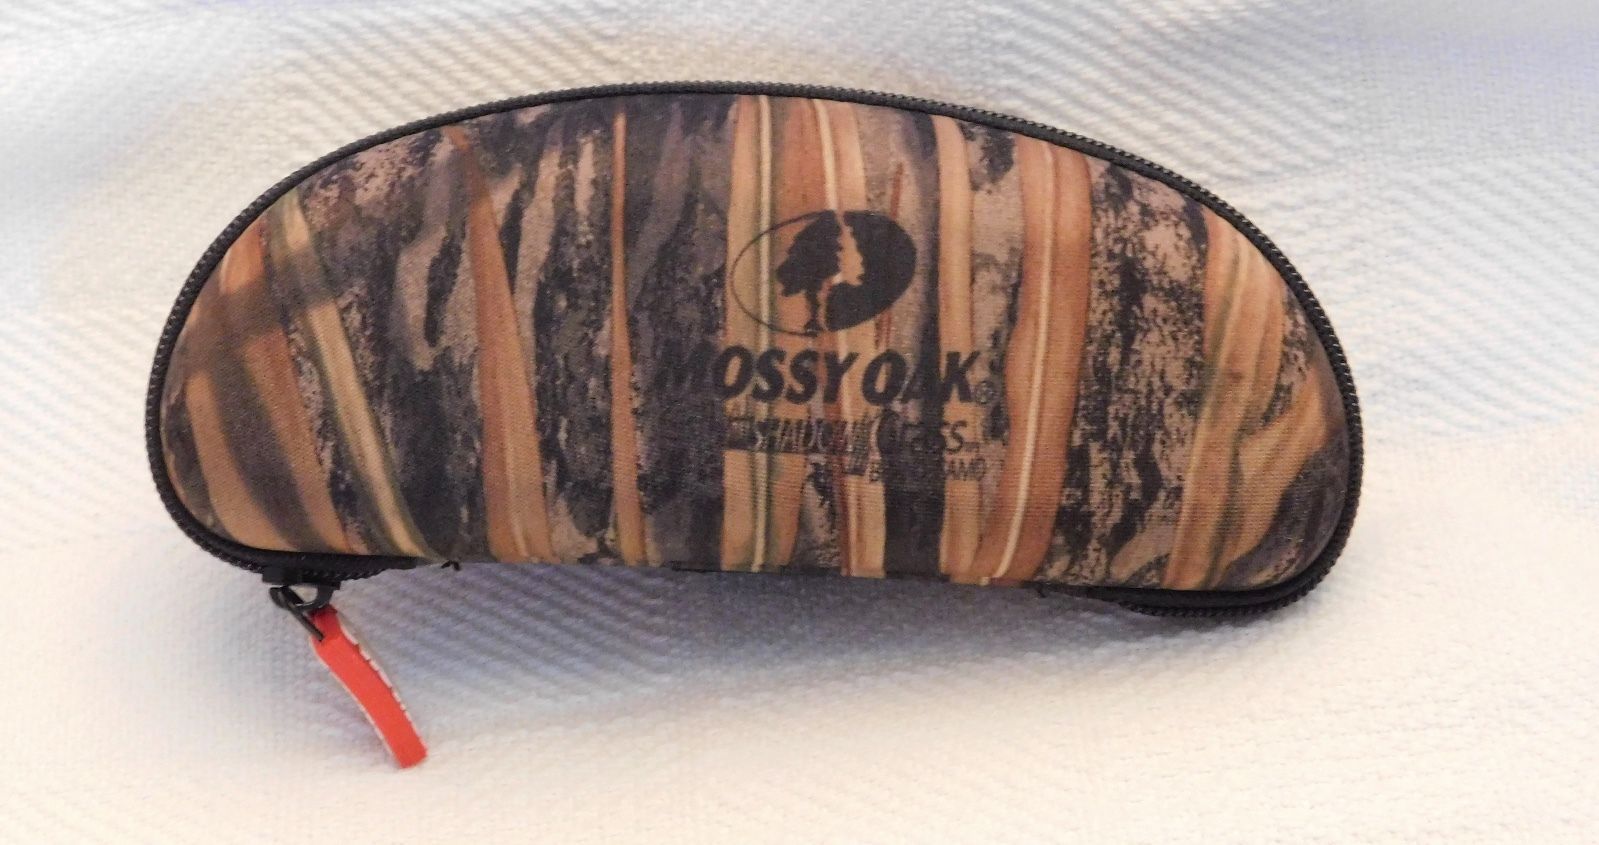 Chums Mossy Oak Hard Side Glasses Case - $8.99